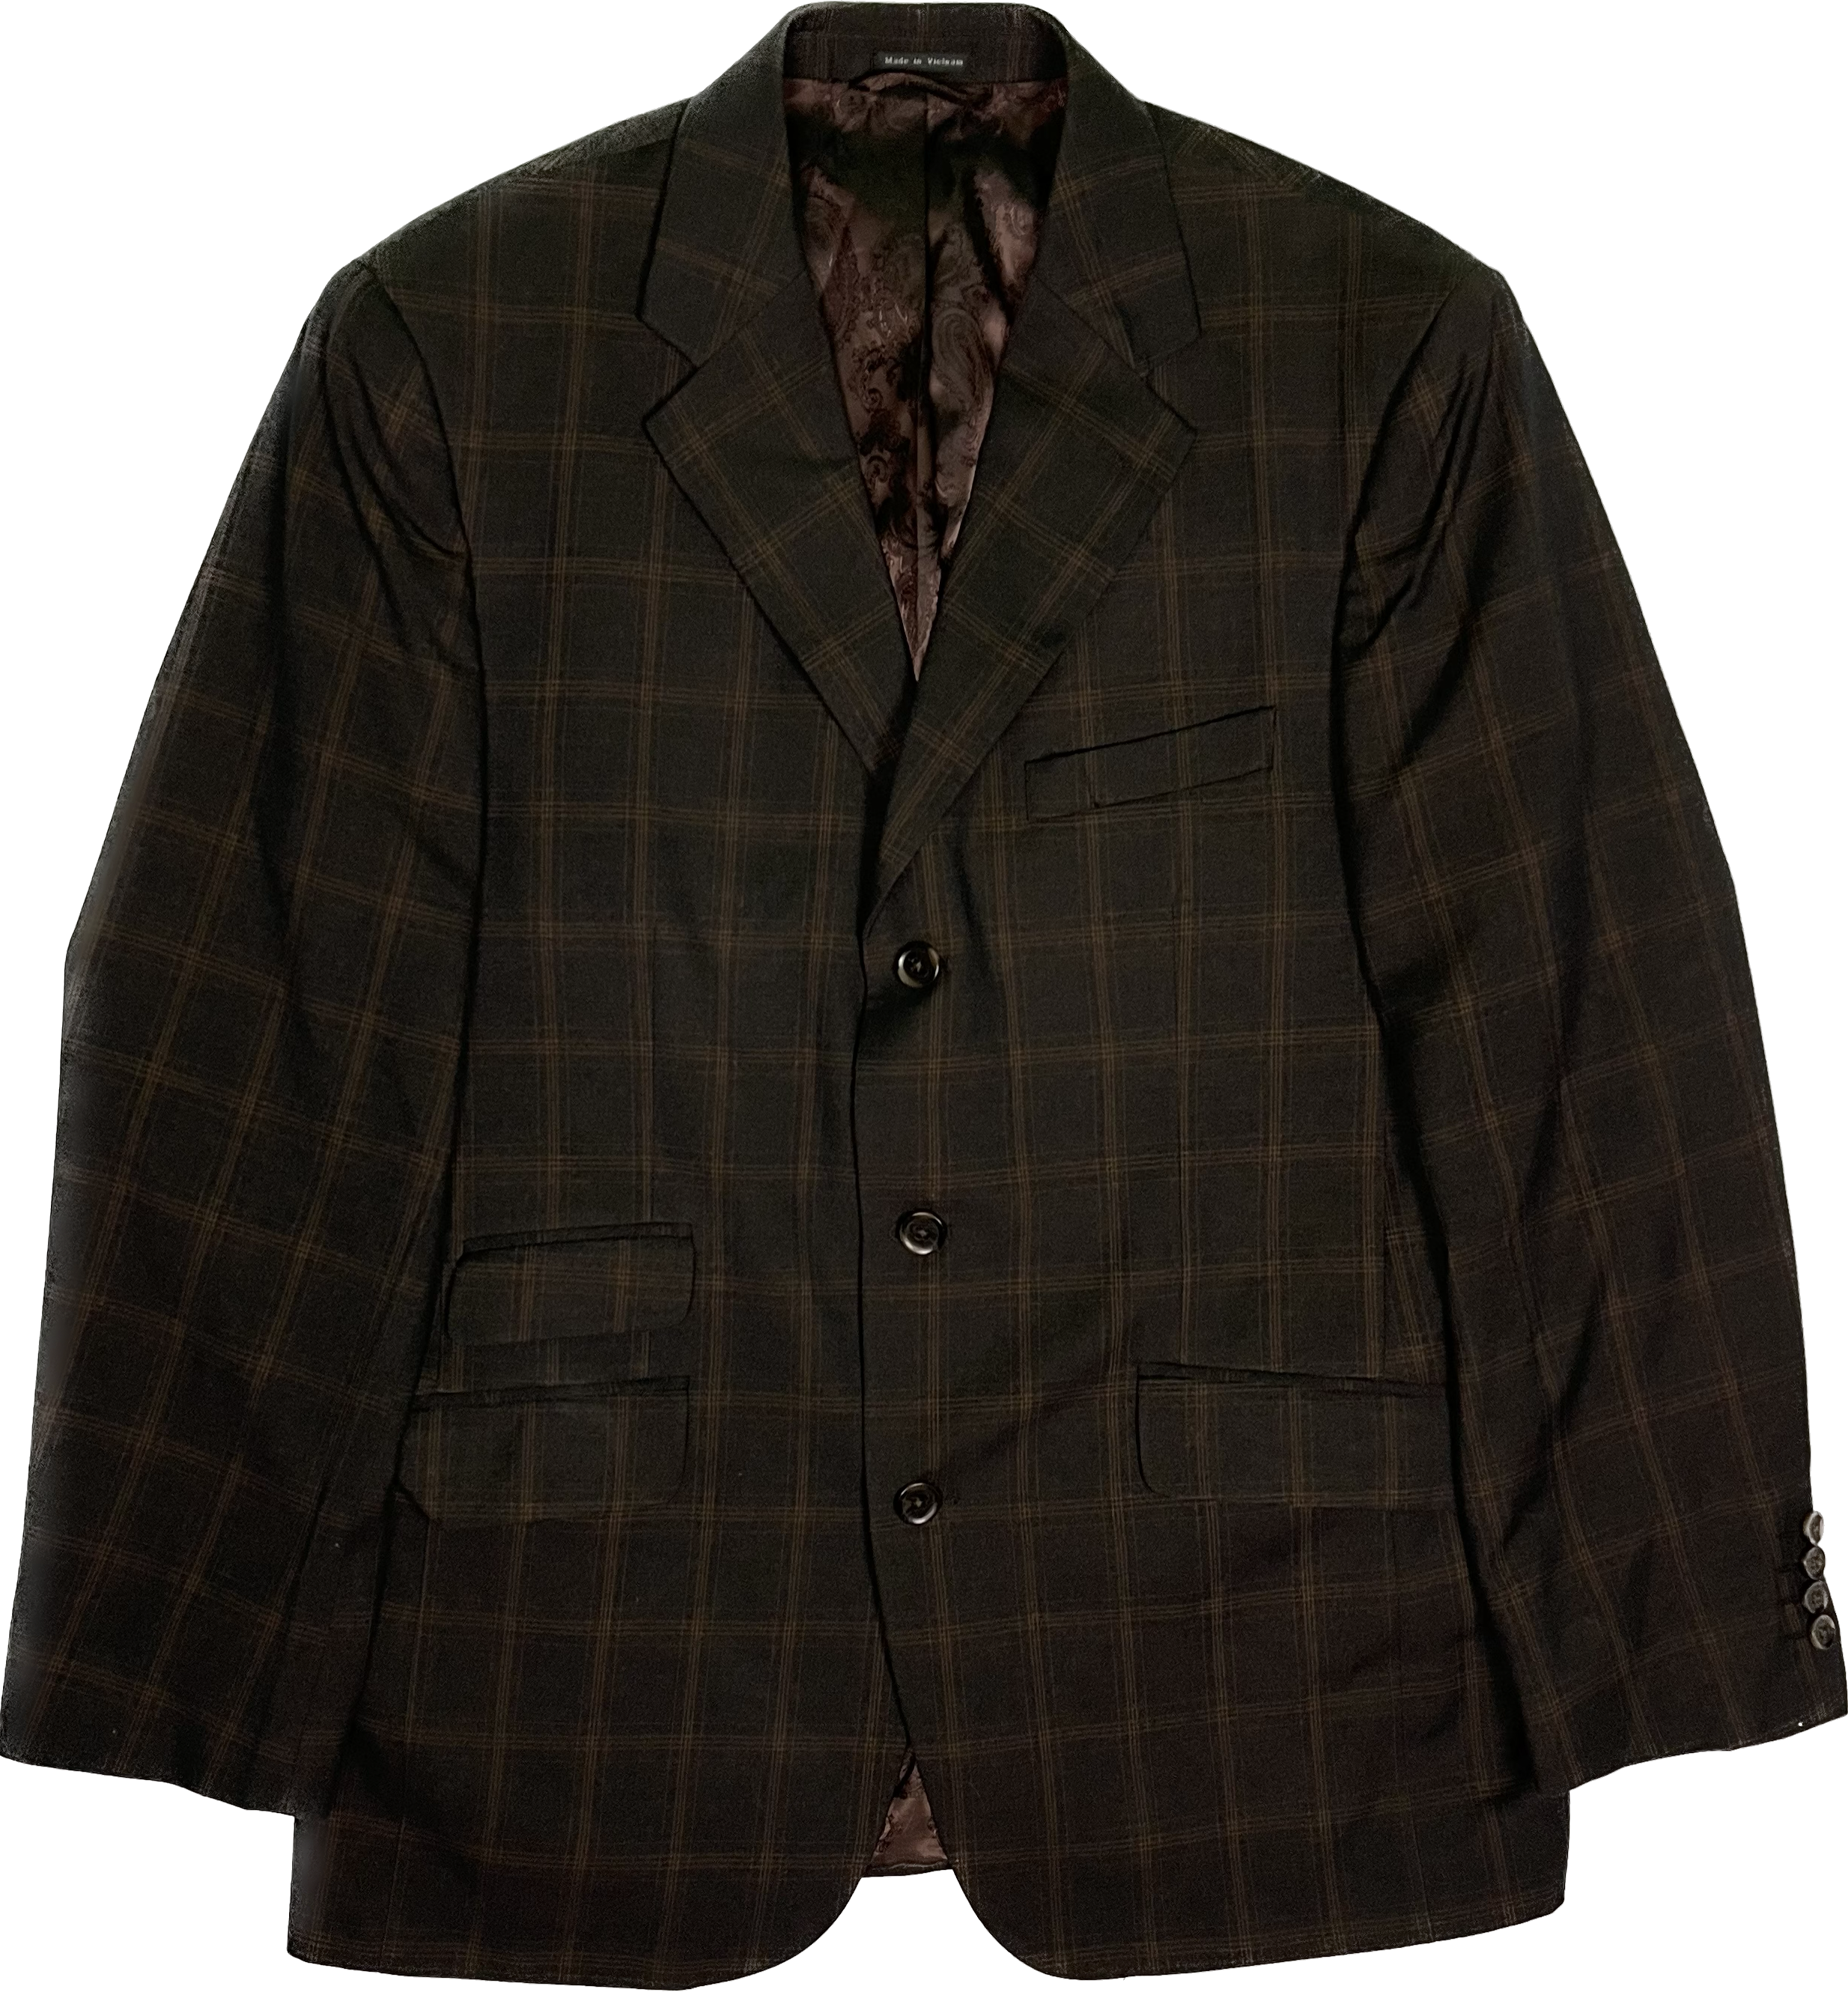 Steve Harvey Suit Jacket / Blazer